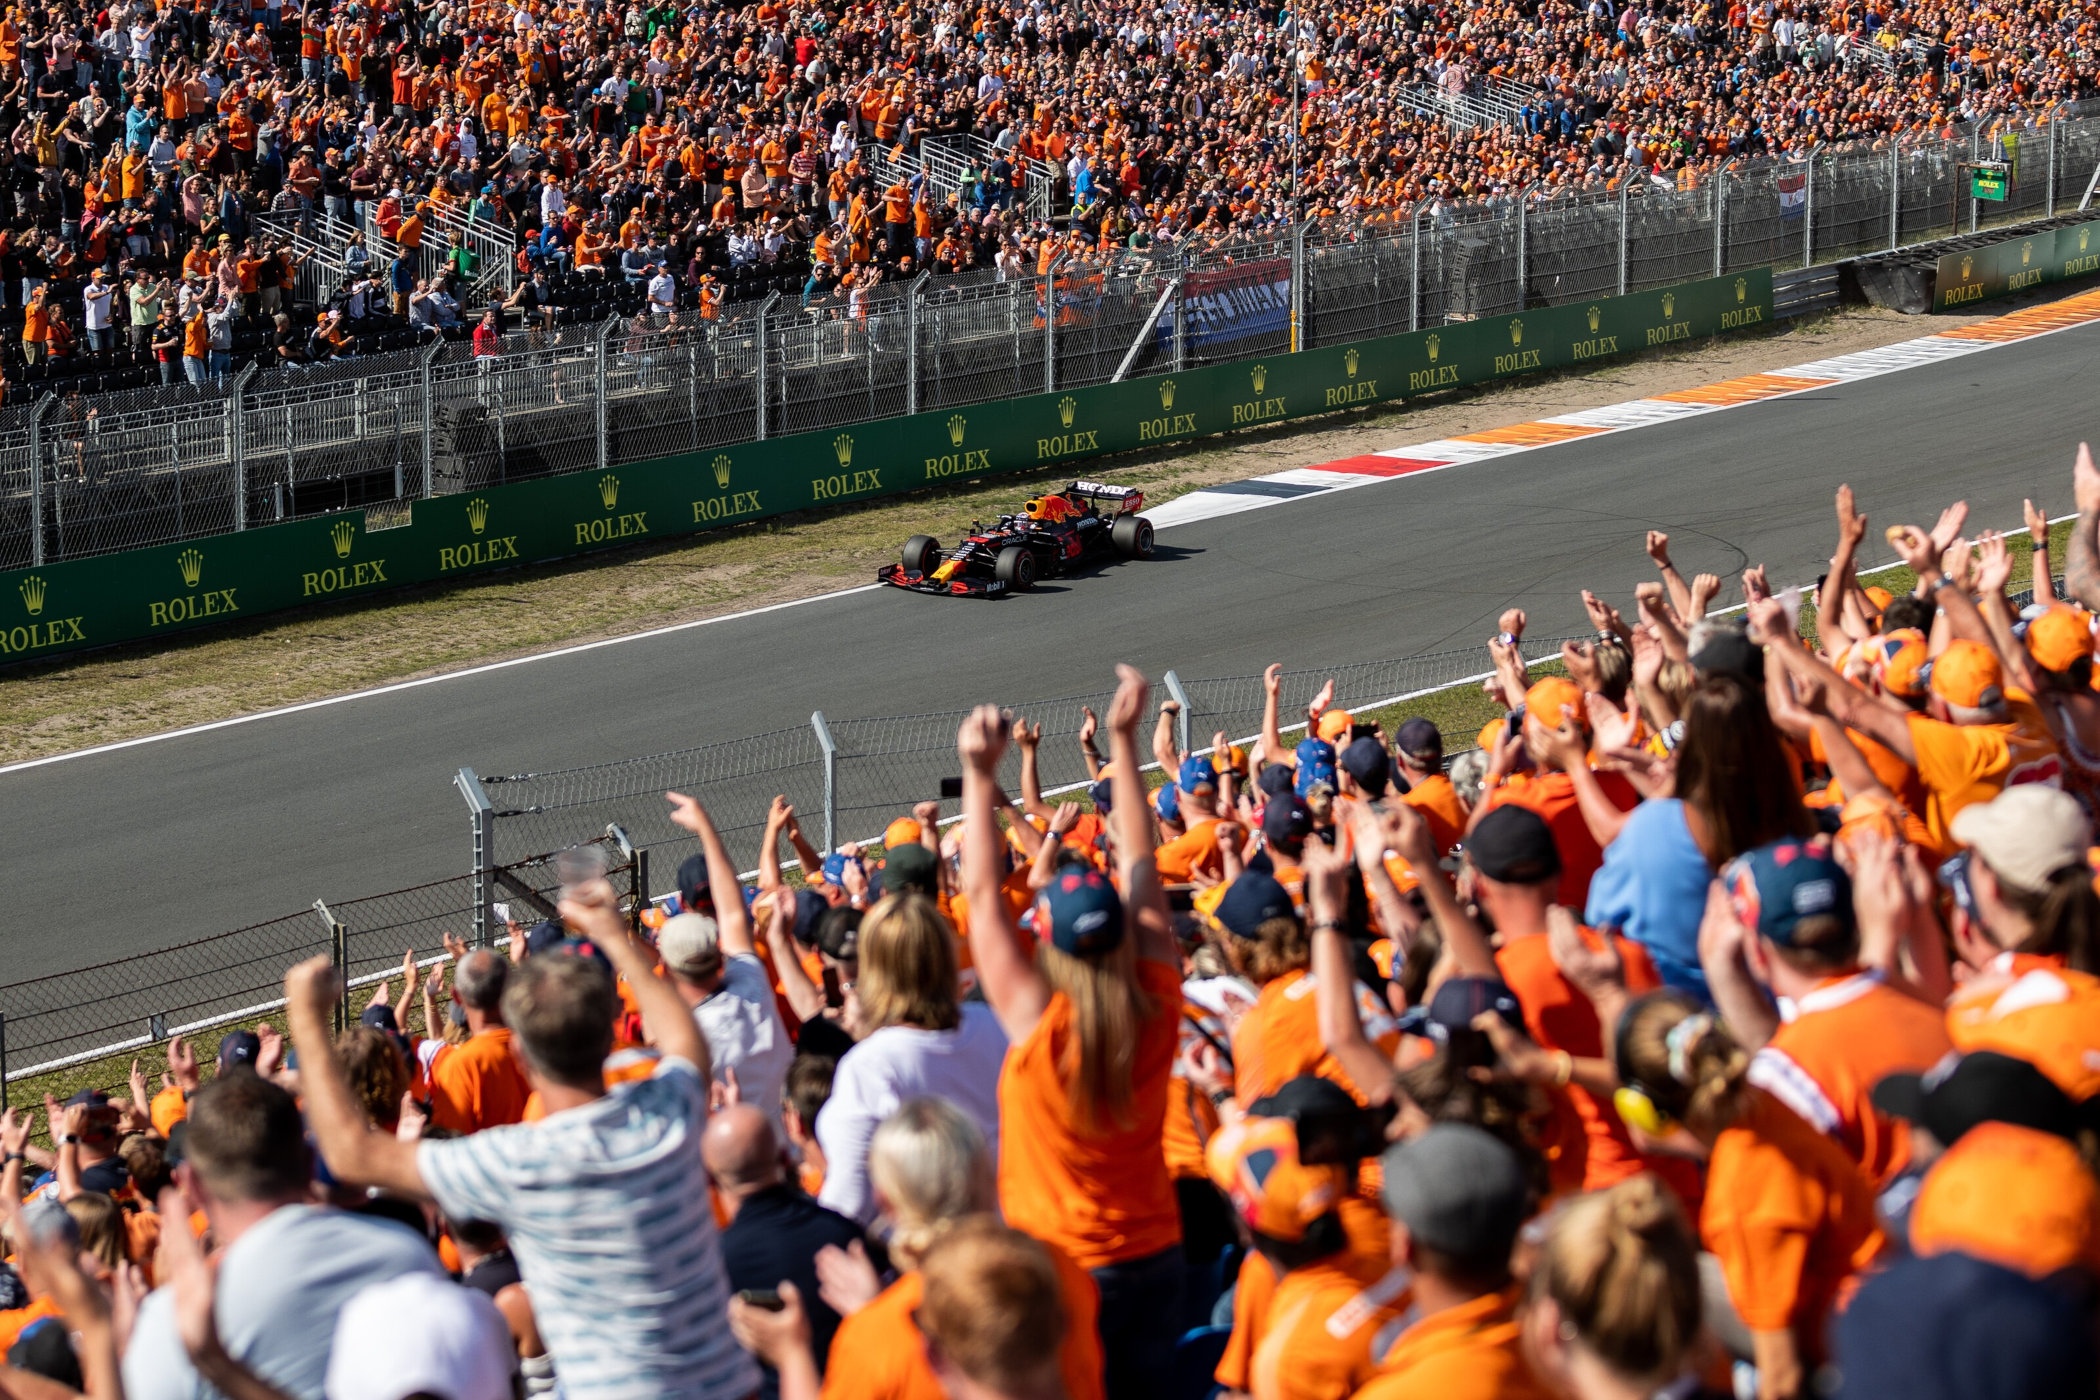 The Orange Army cheering on Max Verstappen at Zandvoort - F1-Fansite.com